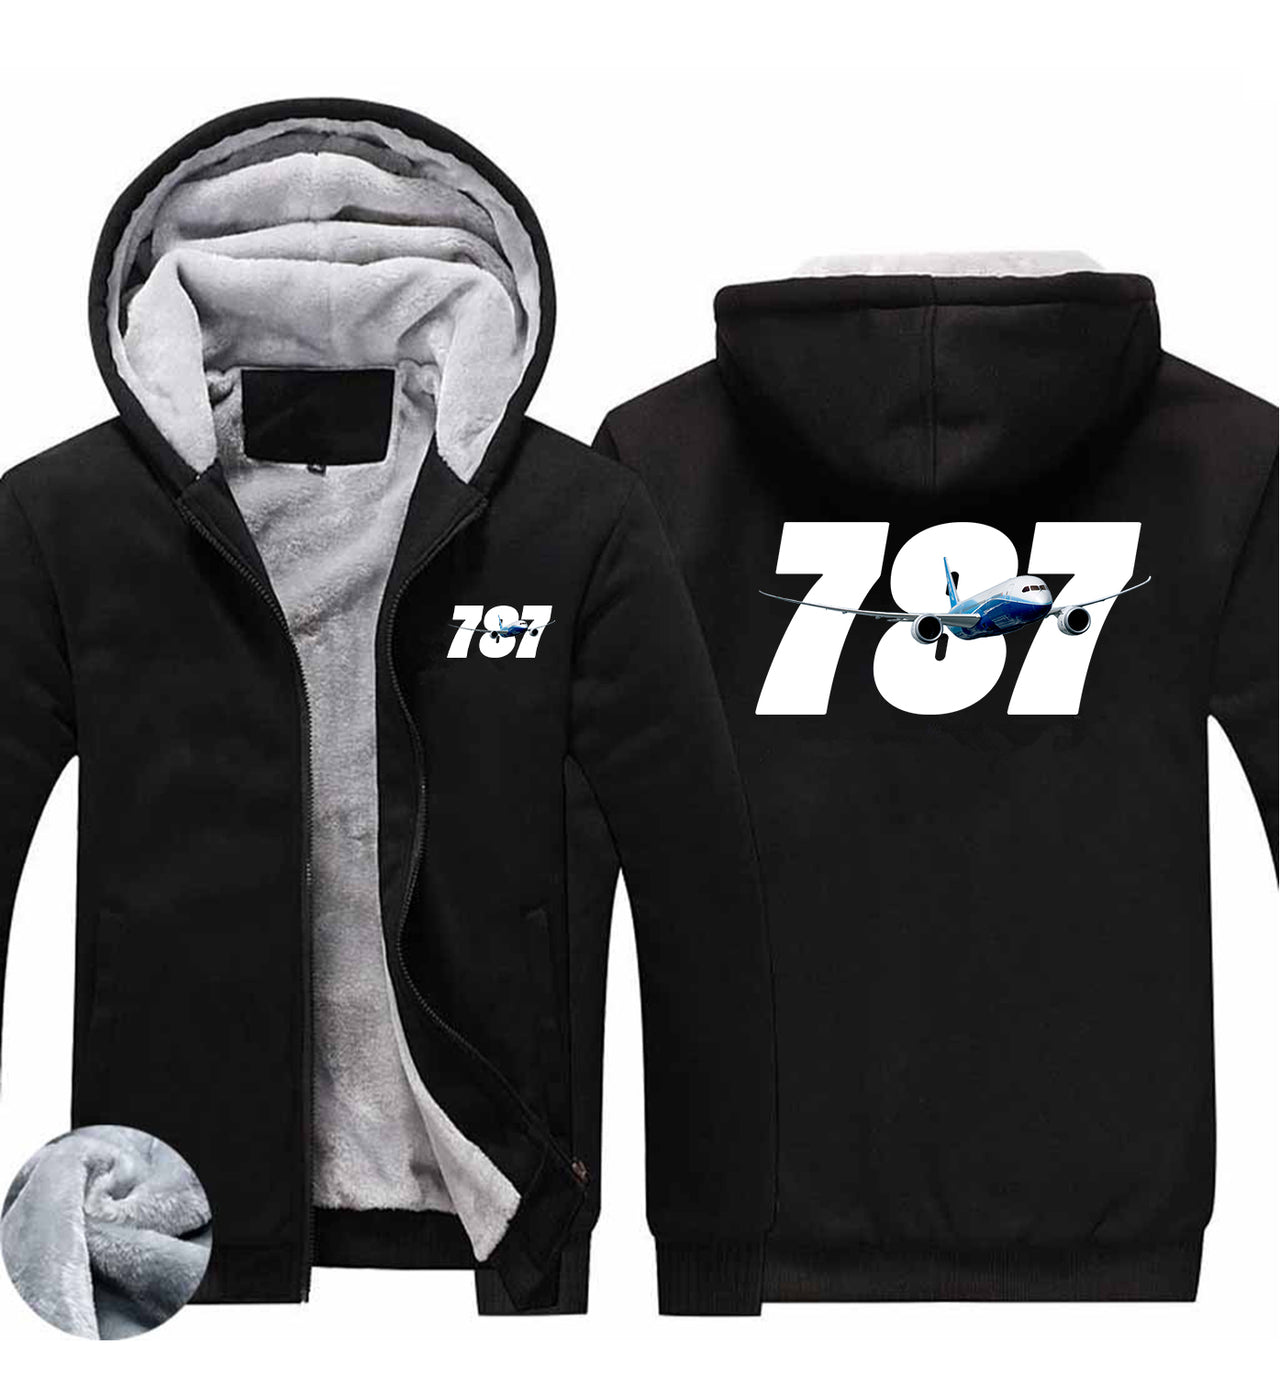 Super Boeing 787 Designed Zipped Sweatshirts